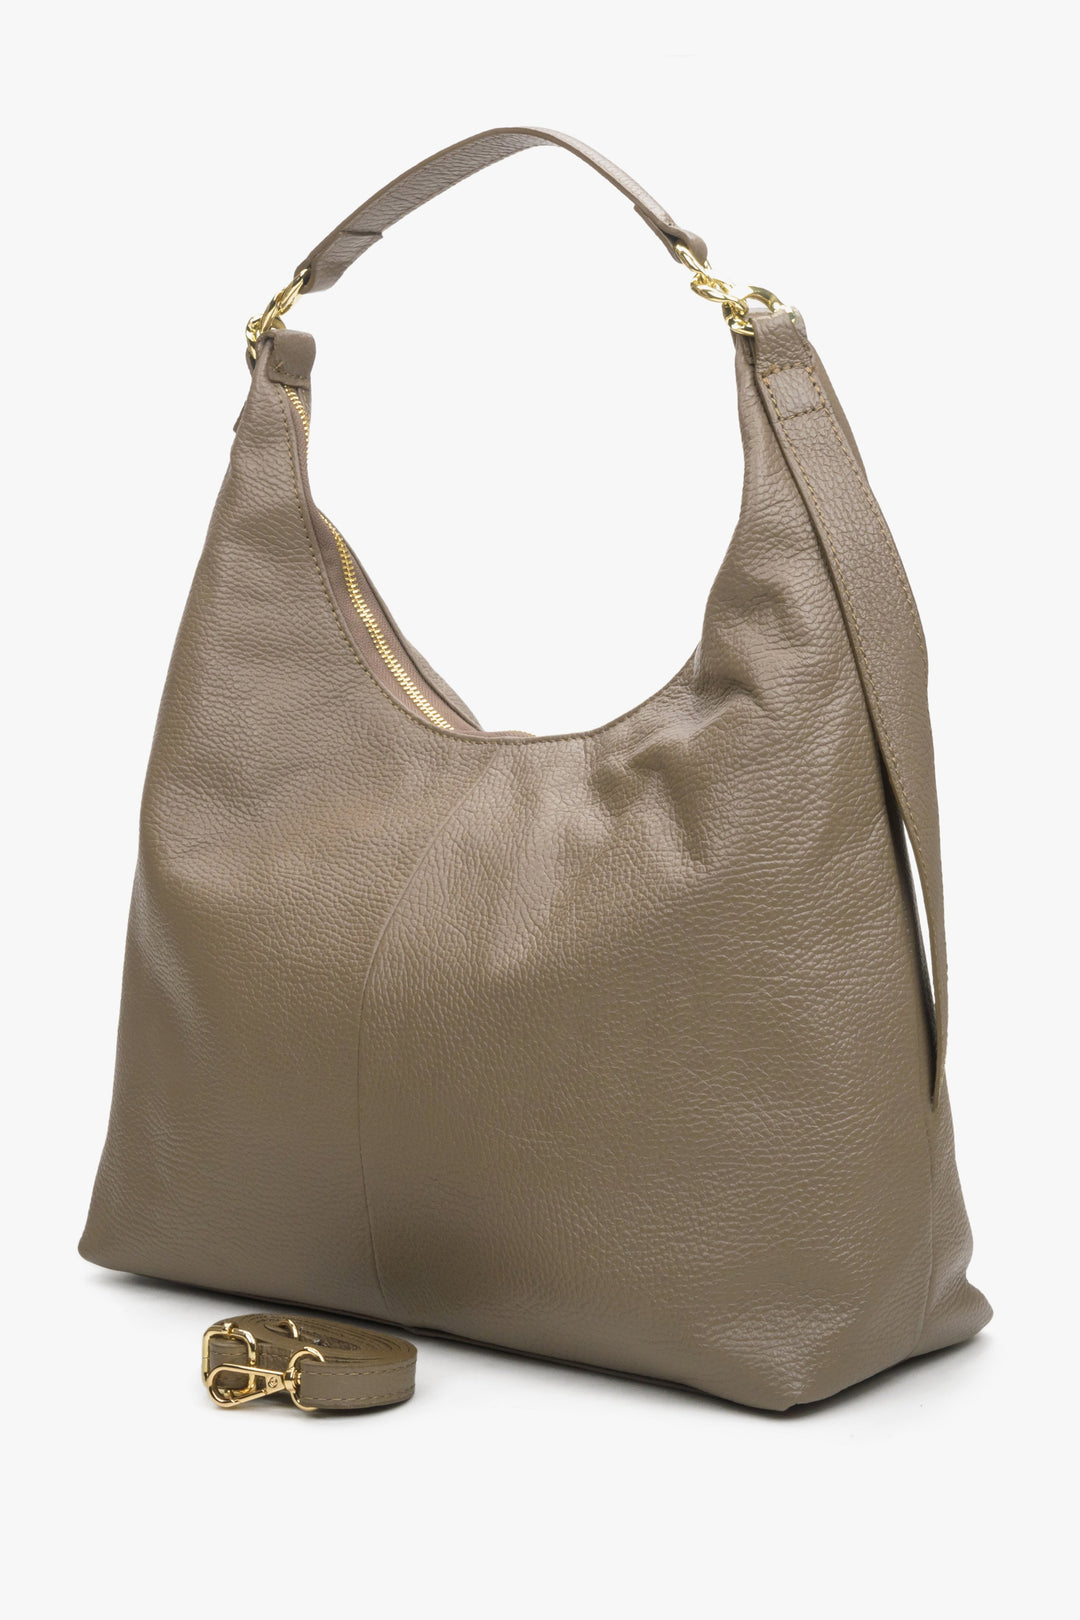 Women's leather beige shopper bag of the Estro brand.